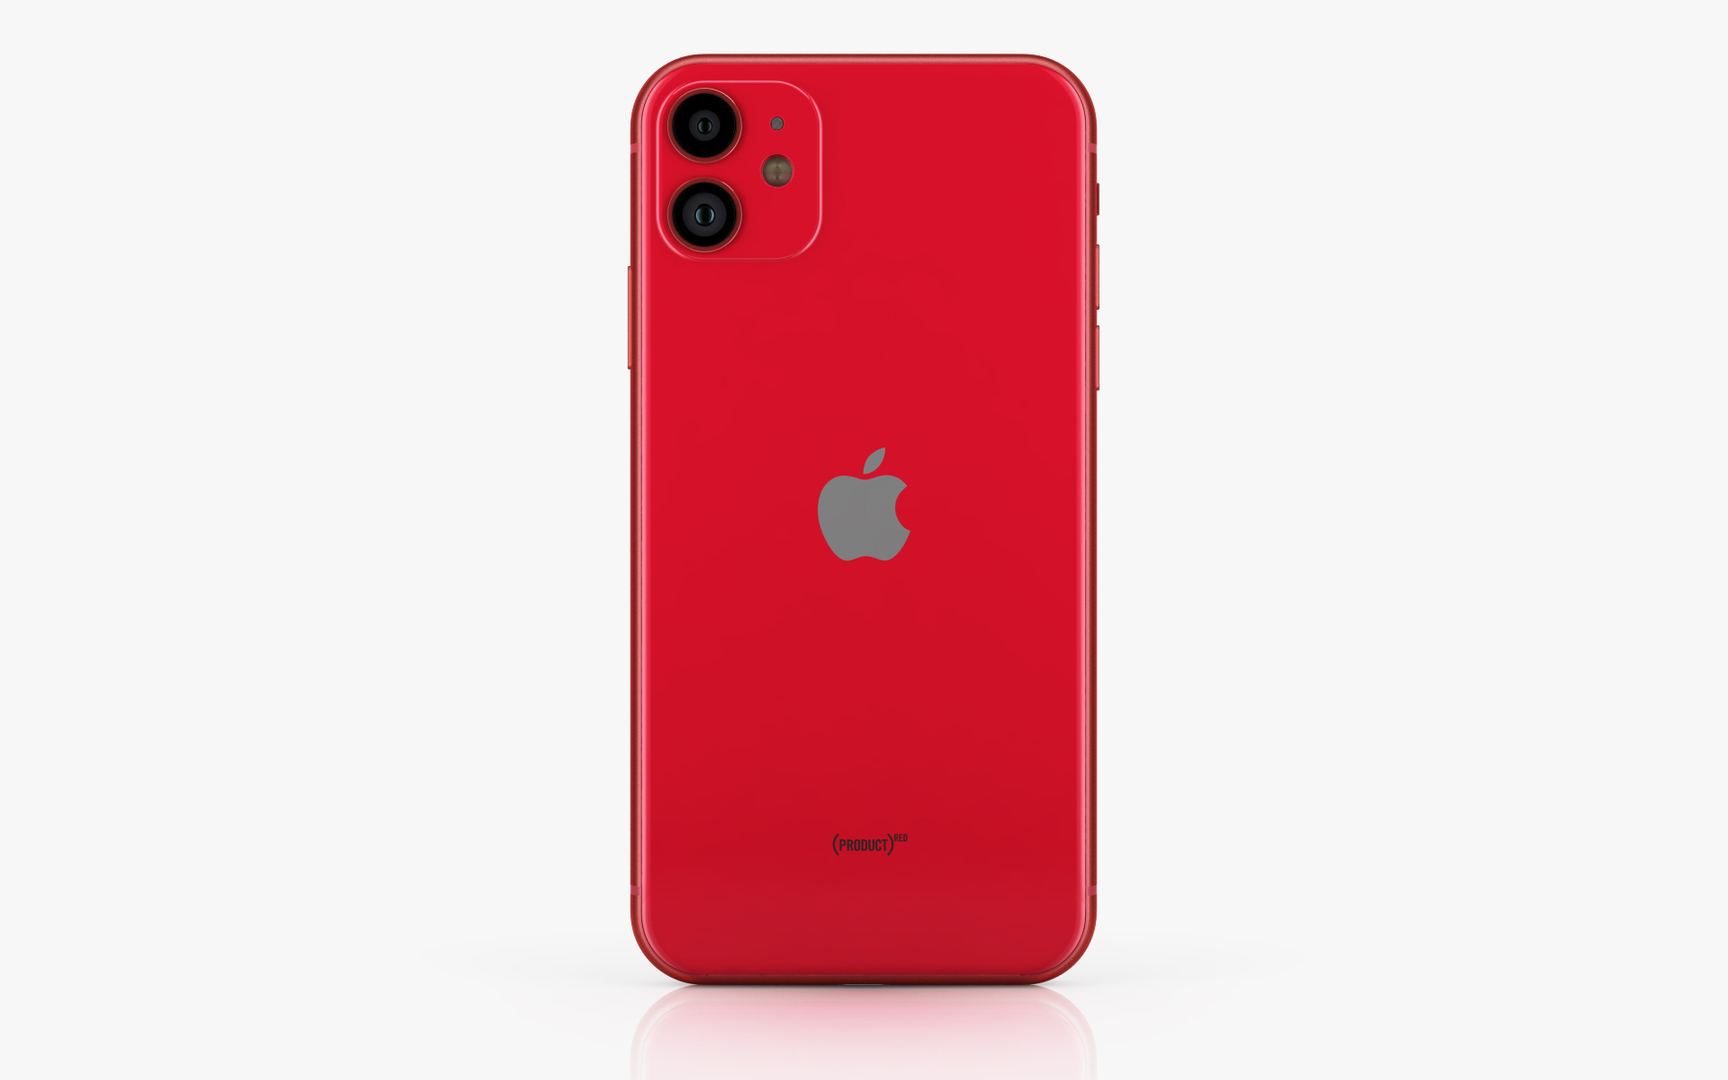 apple iphone 11 color model https://p.turbosquid.com/ts-thumb/7g/G5nufe/Q6DdcOgr/iphone11_red/jpg/1568921630/1920x1080/turn_fit_q99/7bdf9790d28da5101defde8196ff8d68089b10ec/iphone11_red-1.jpg